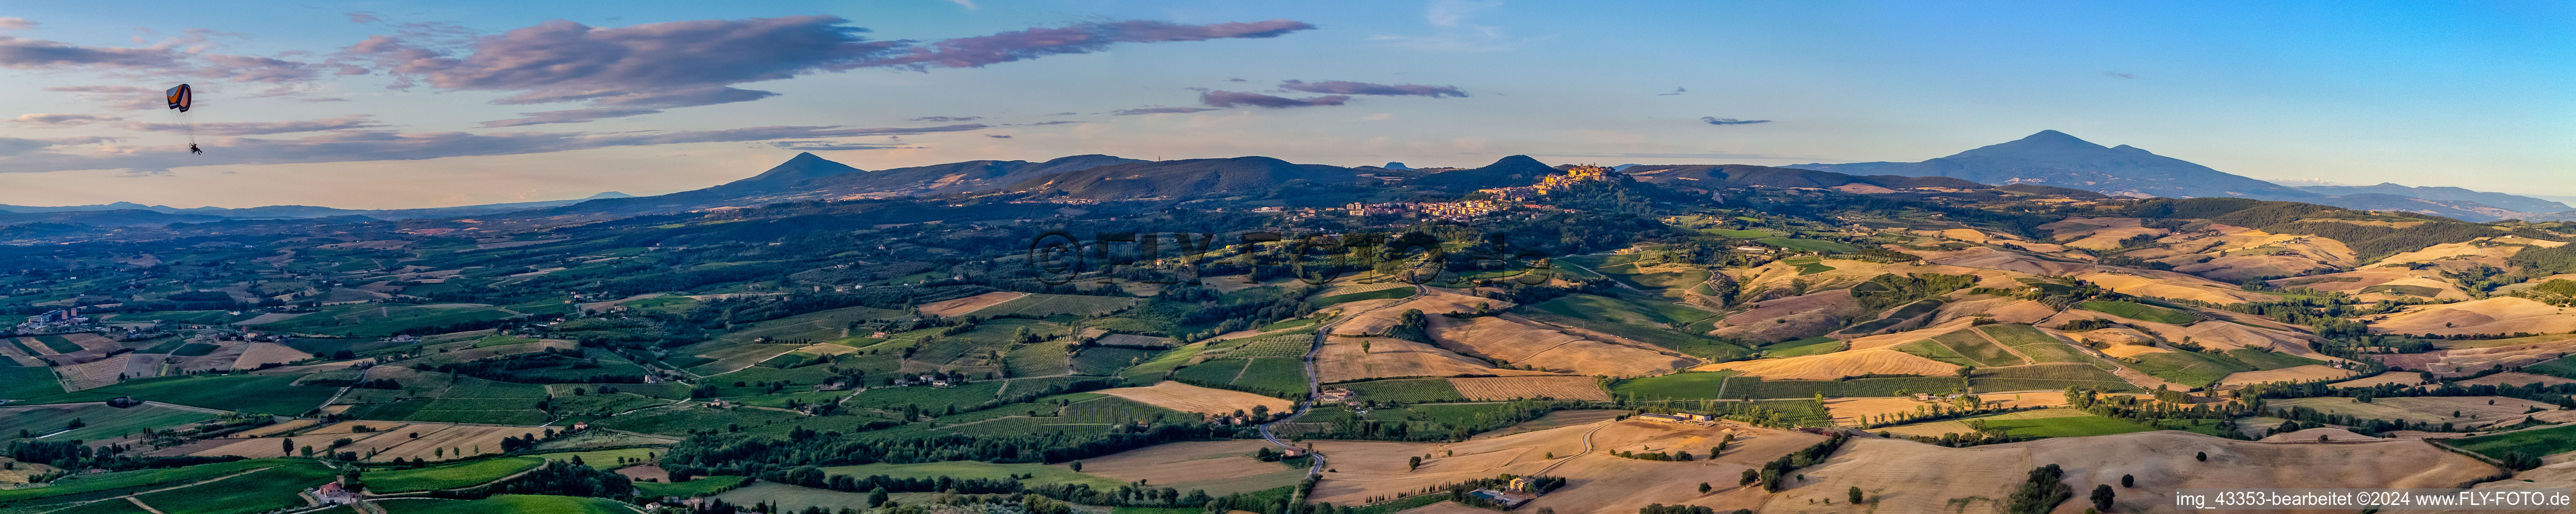 Panorama - Perspektive mit Gleitschirm der Gipfel in der Felsen- und Berglandschaft in Montepulciano in Toskana im Bundesland Toscana, Italien